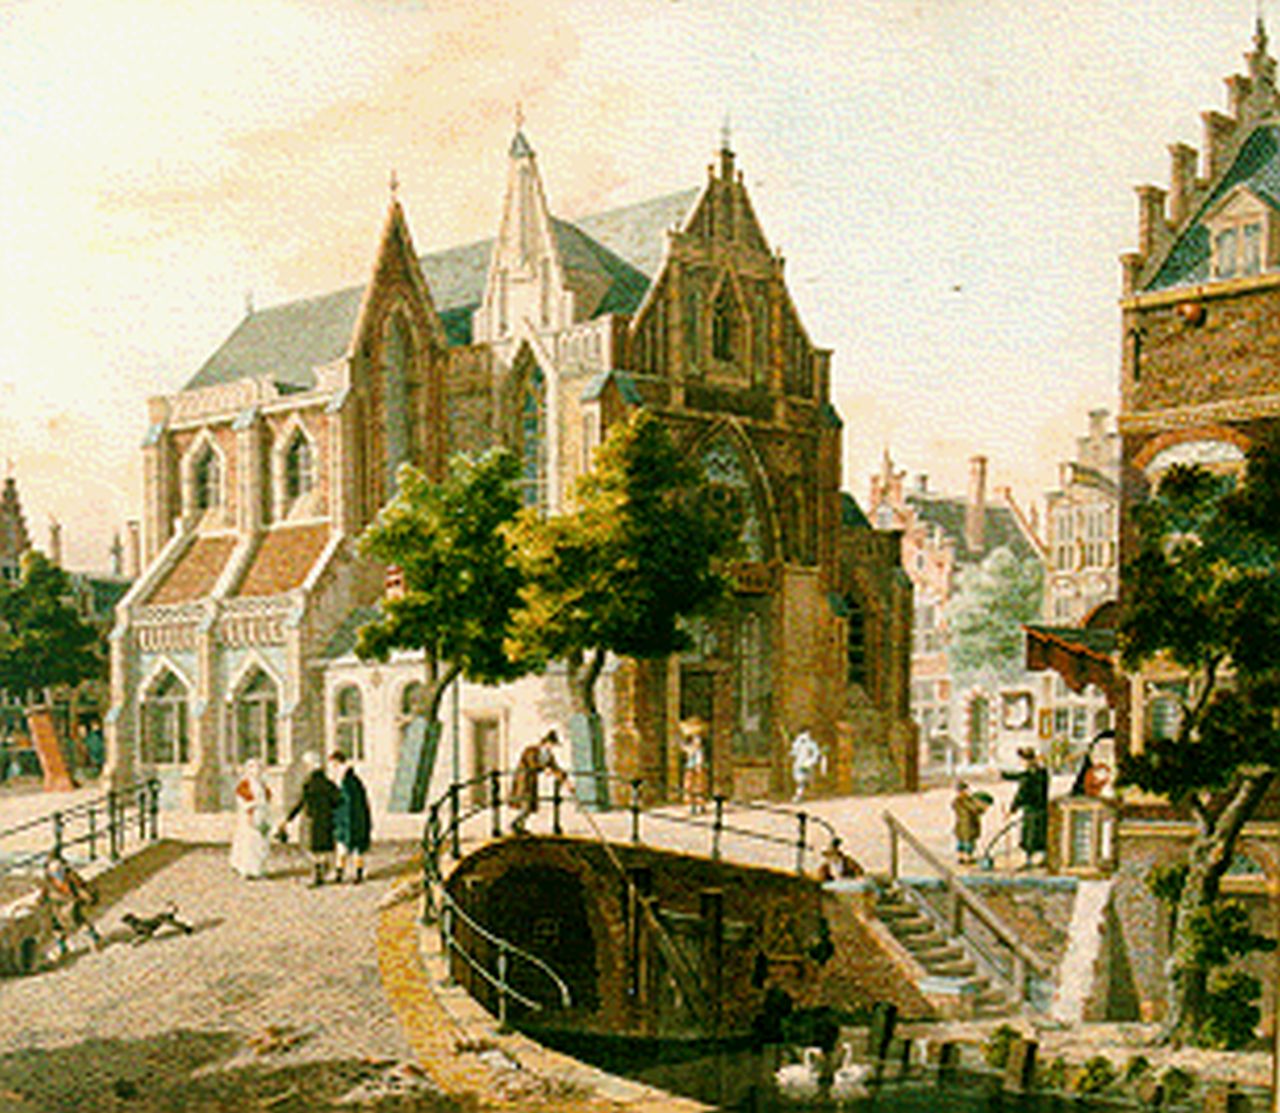 Verheijen J.H.  | Jan Hendrik Verheijen, Figures in a sunlit town, Aquarell auf Papier 36,0 x 41,5 cm, signed l.c. und dated 1811